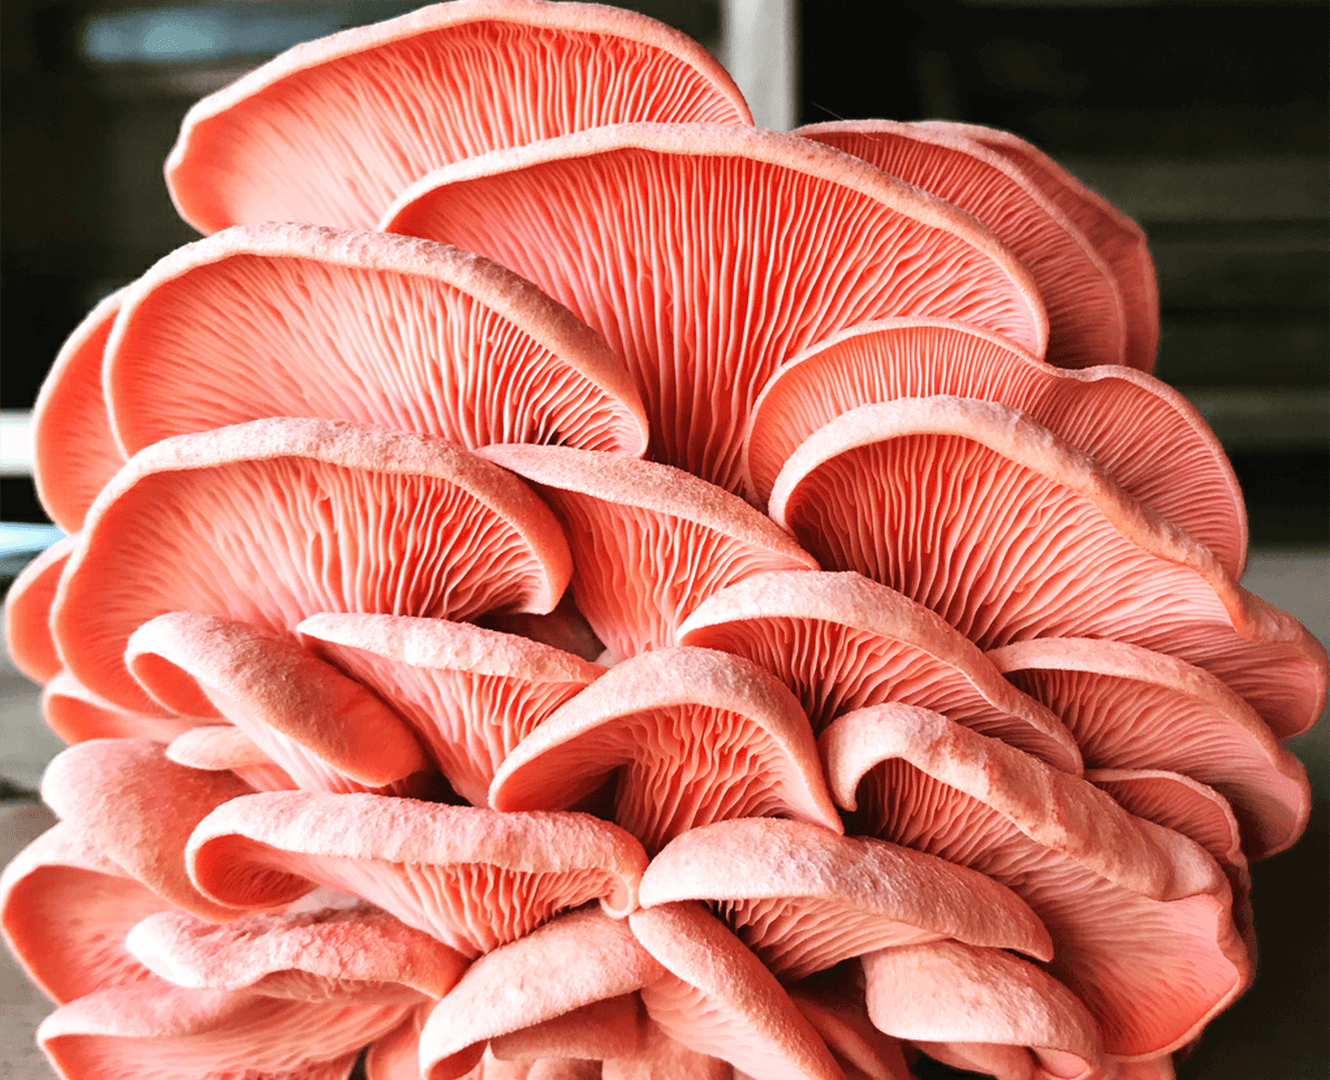 large pink oyster mushroom